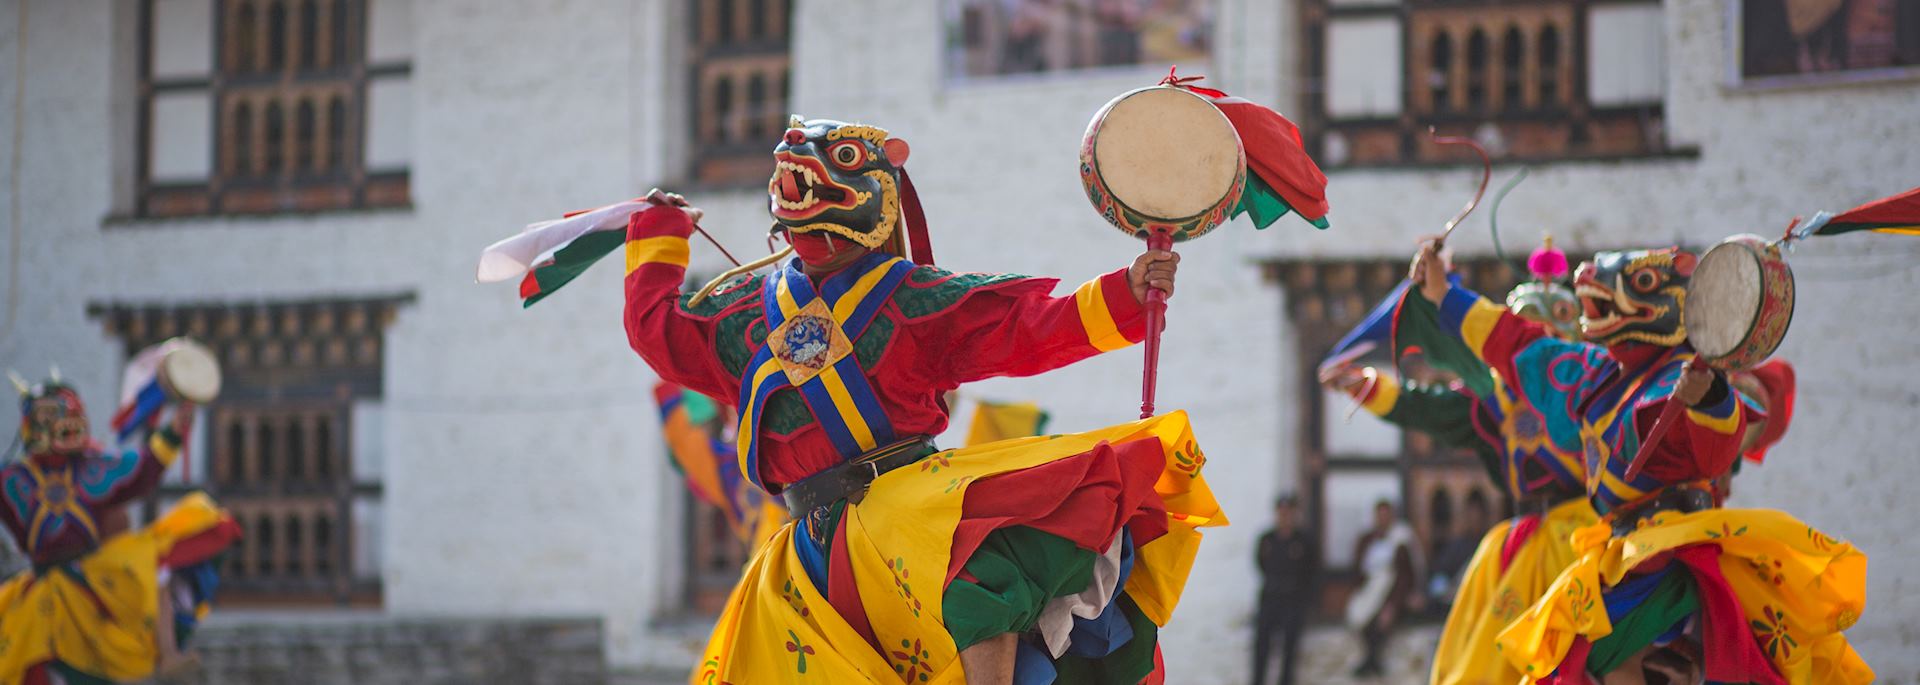 Traditional dance in Bhutan